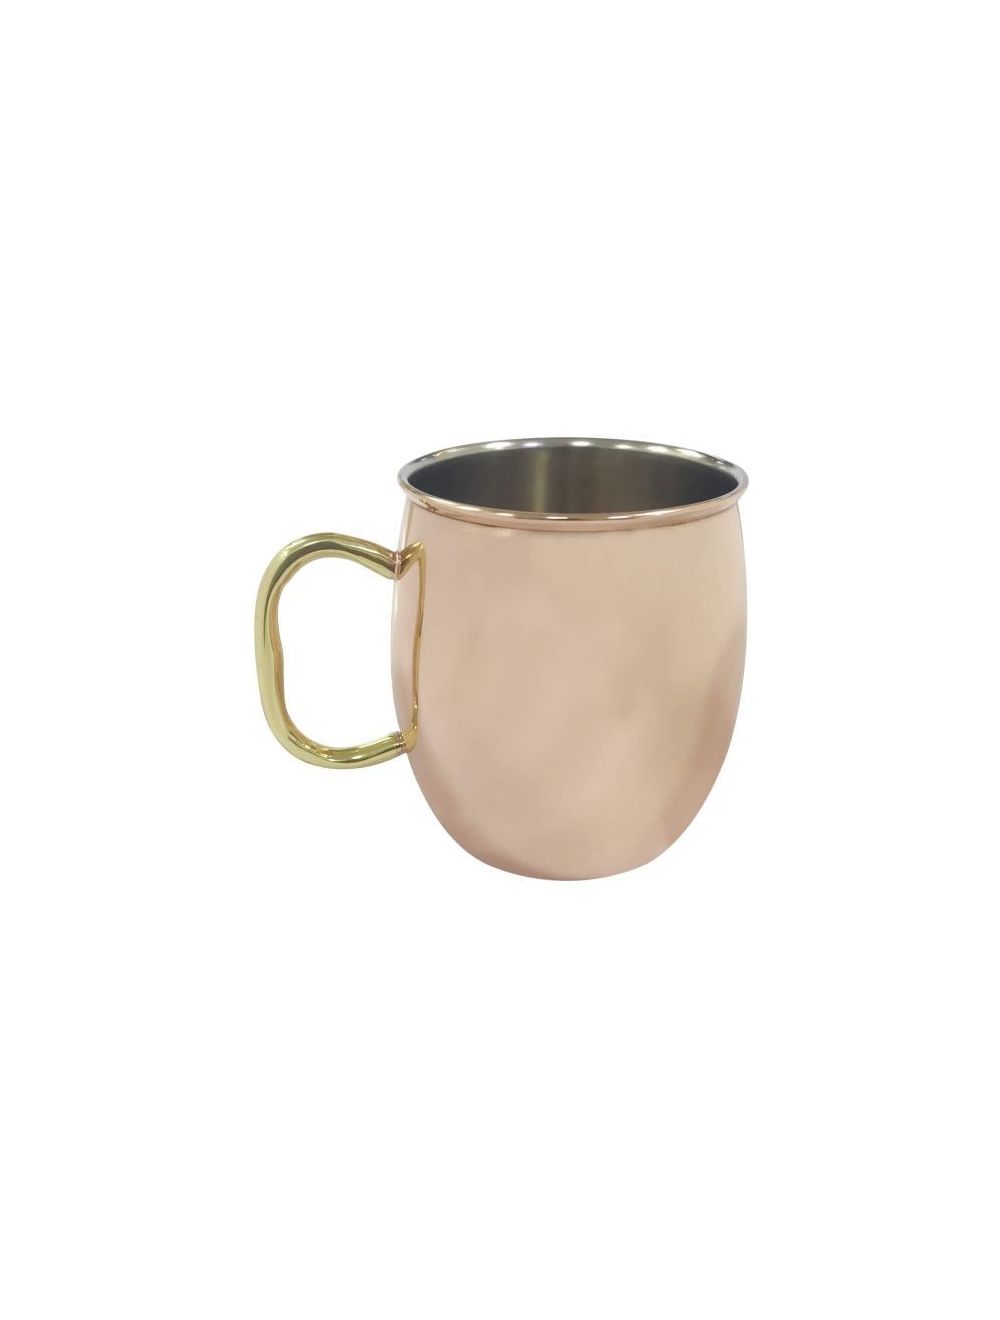 Raj Steel Copper-Plated Moscow Mule Mug - SMMM01